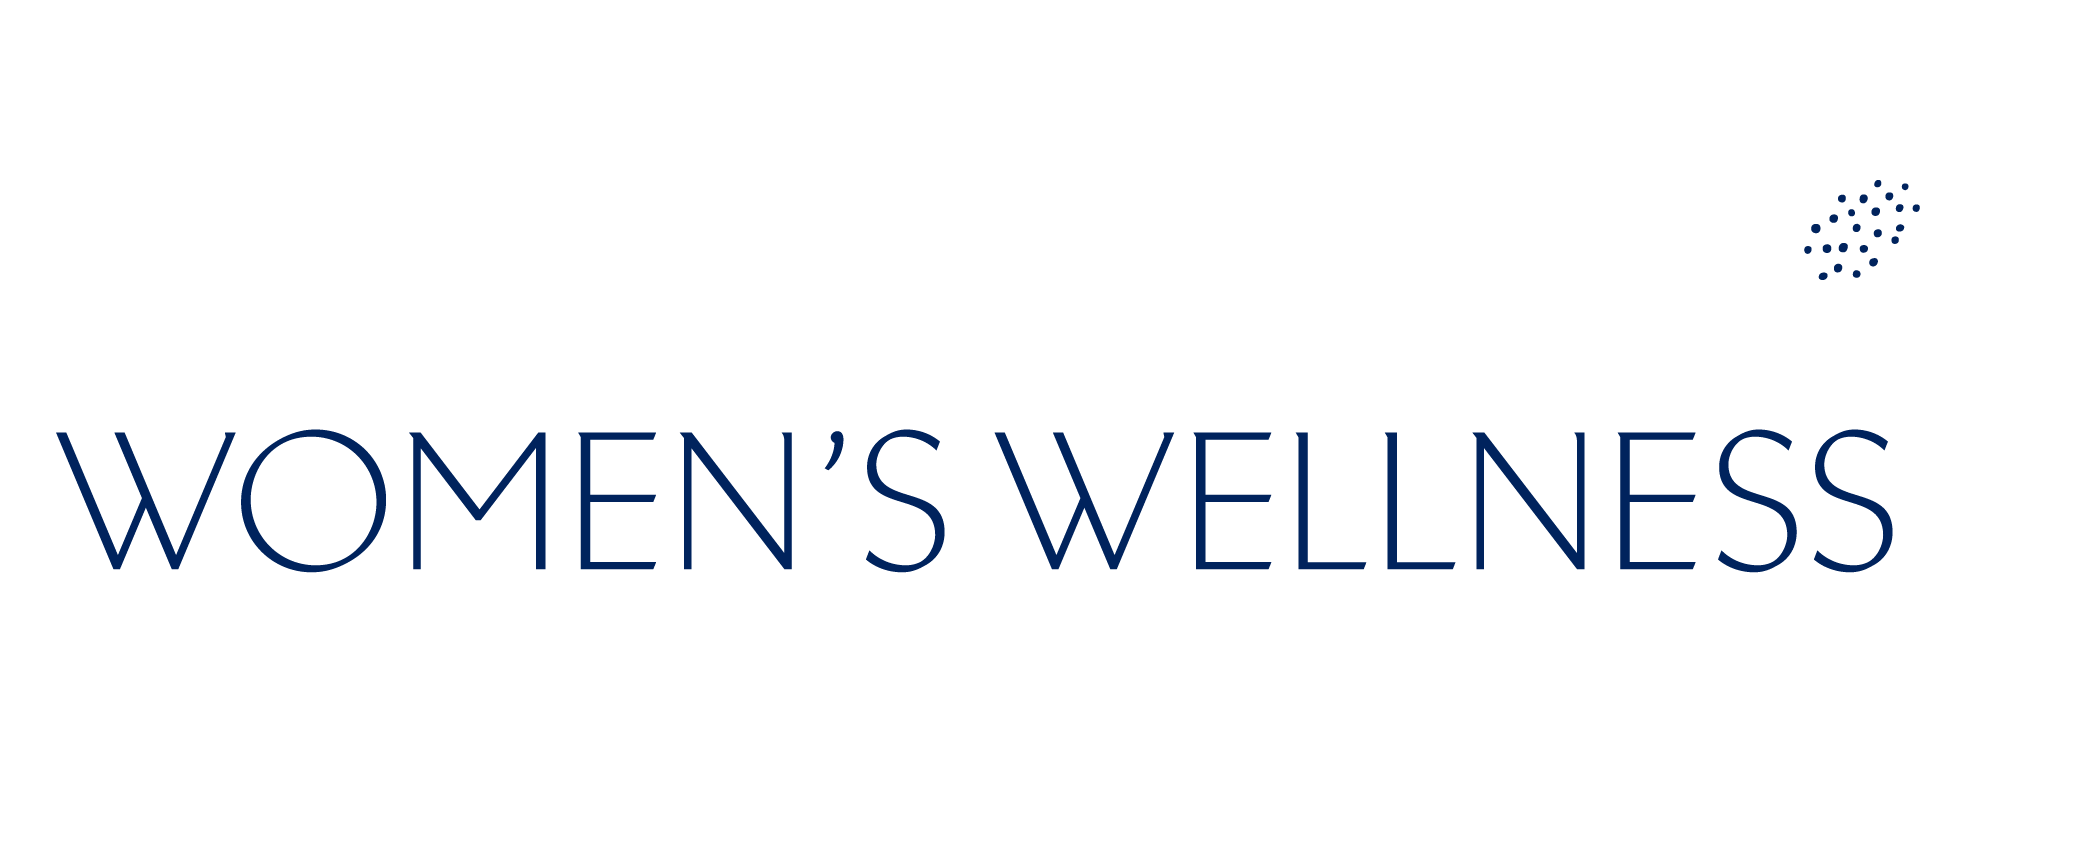 Women’s Wellness with Type 2 Diabetes Programme